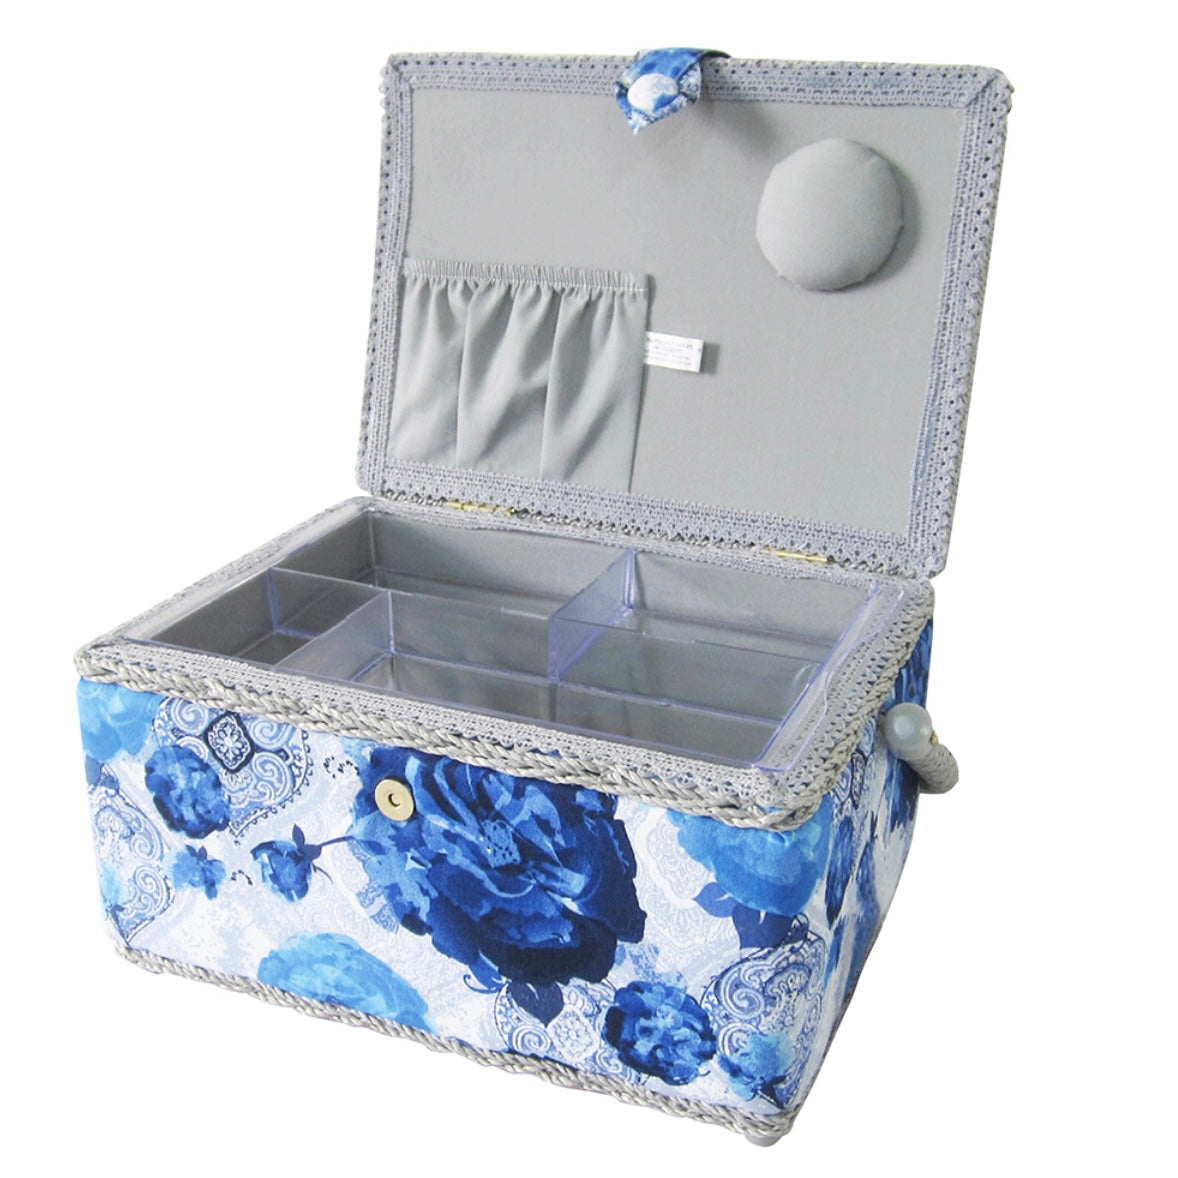 Medium Sewing Basket - Blue Floral